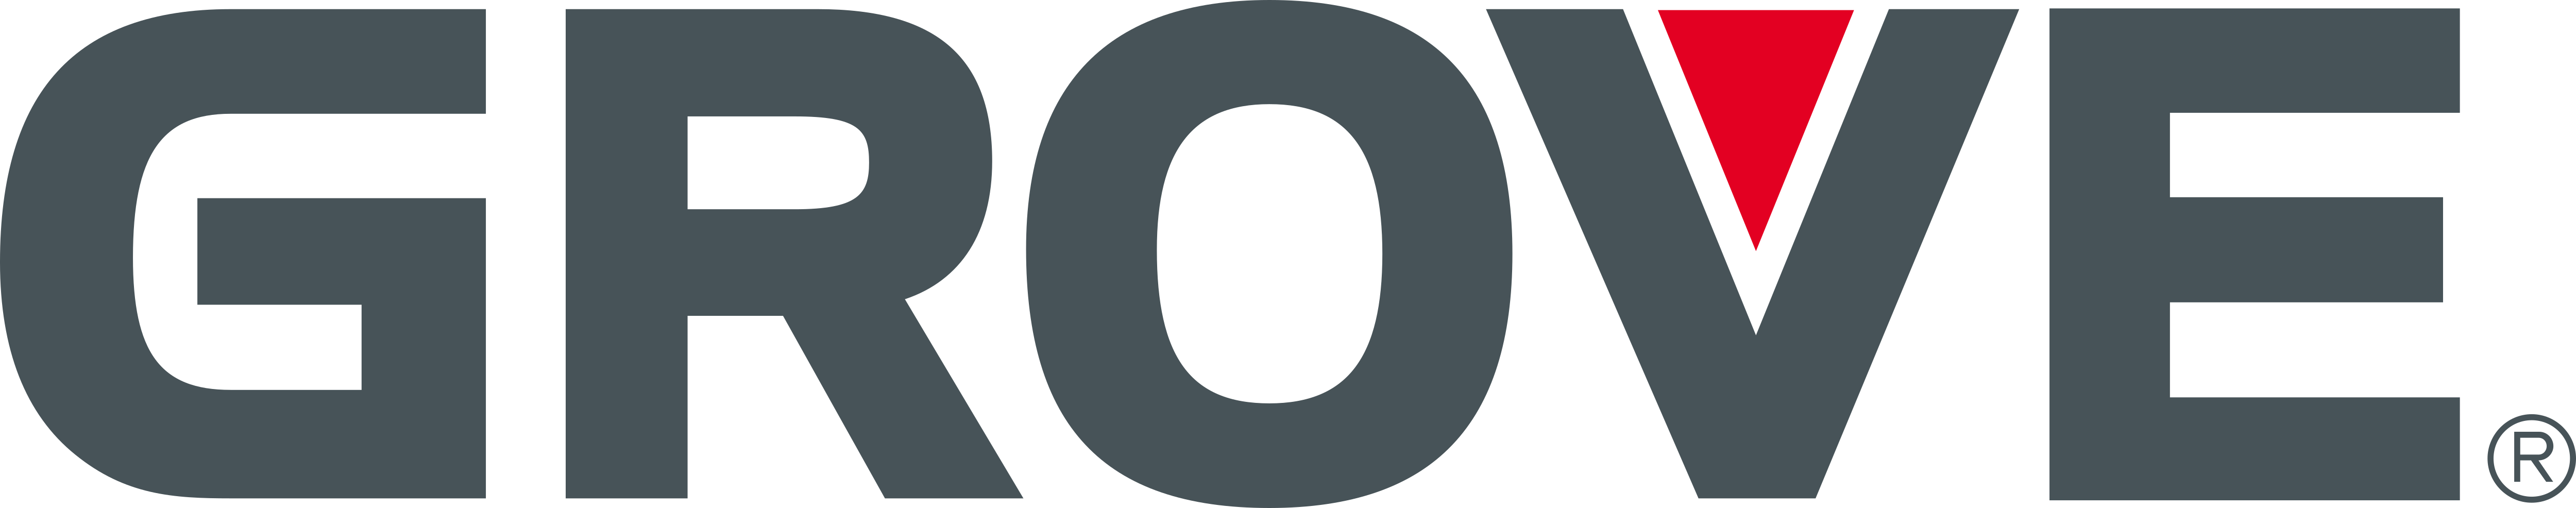 Grove логотип